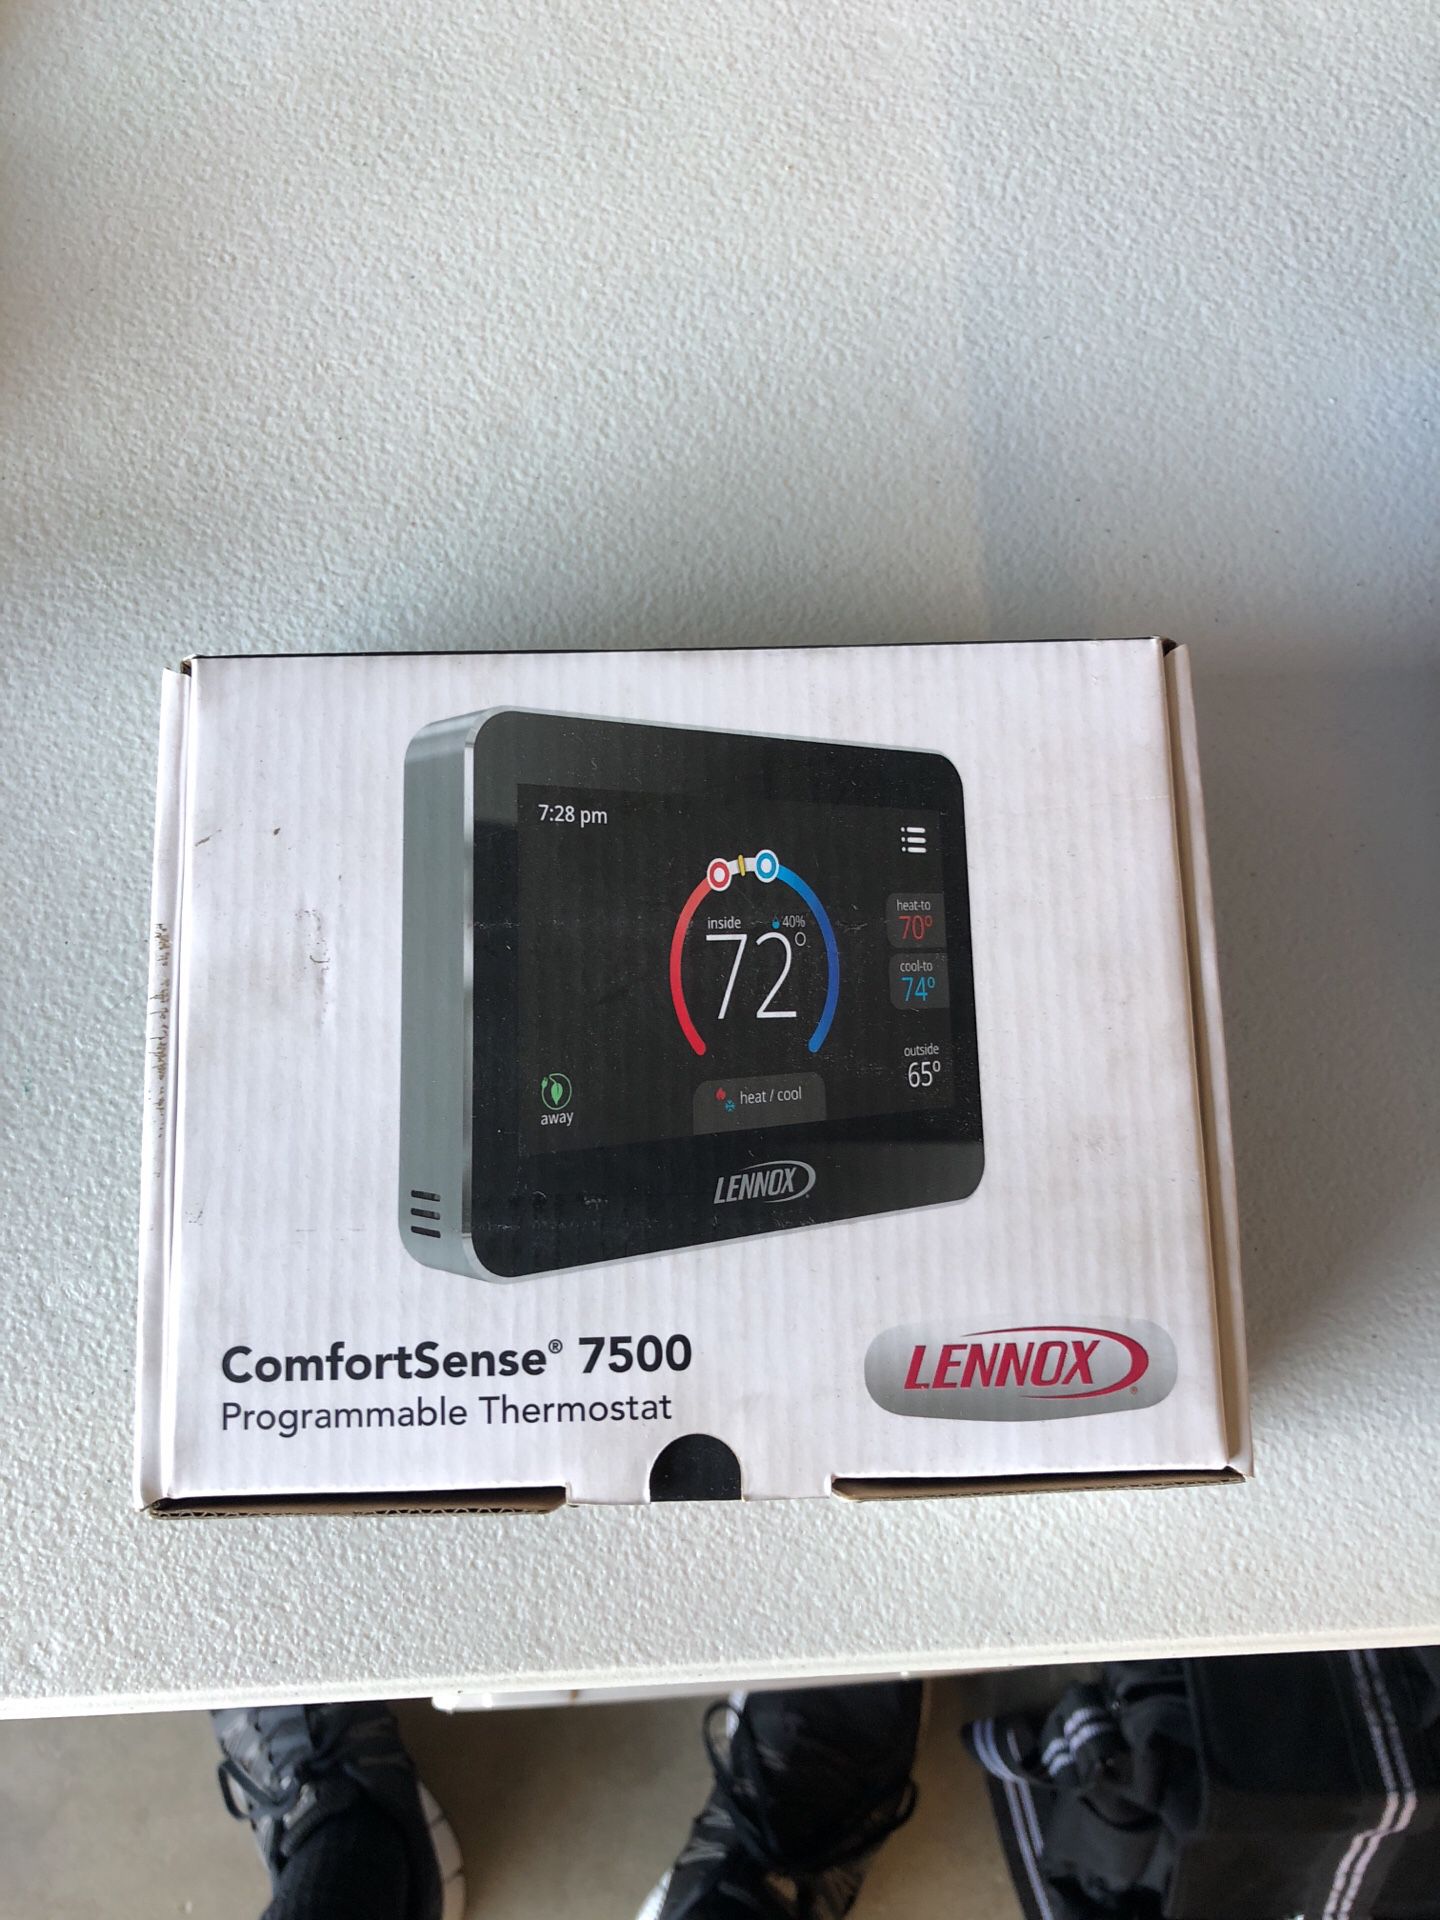 Comforsense 7500 programmable thermostat